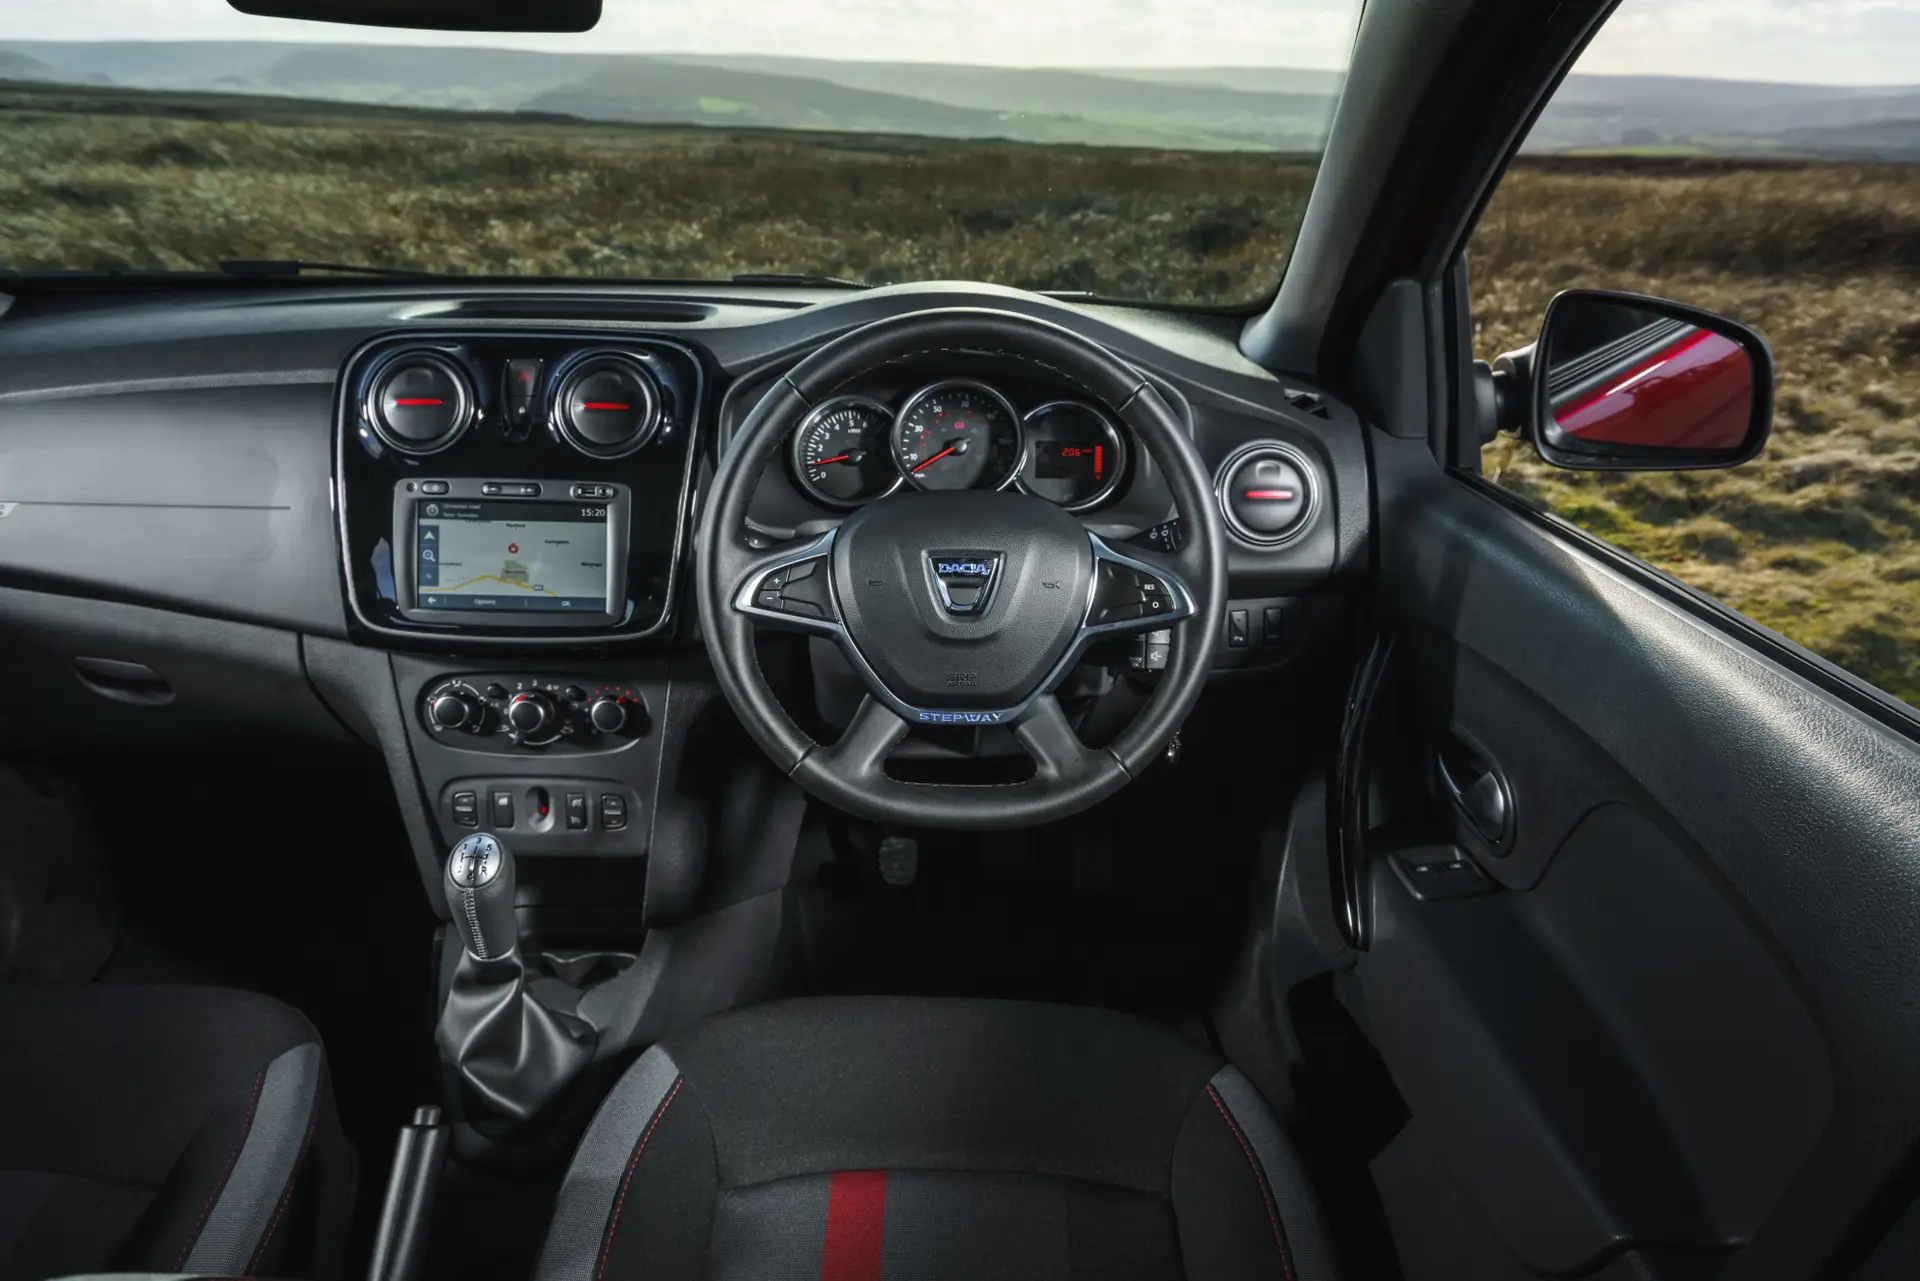 Dacia Sandero Stepway (2013-2021) Review: interior close up photo of the Dacia Sandero Stepway dashboard